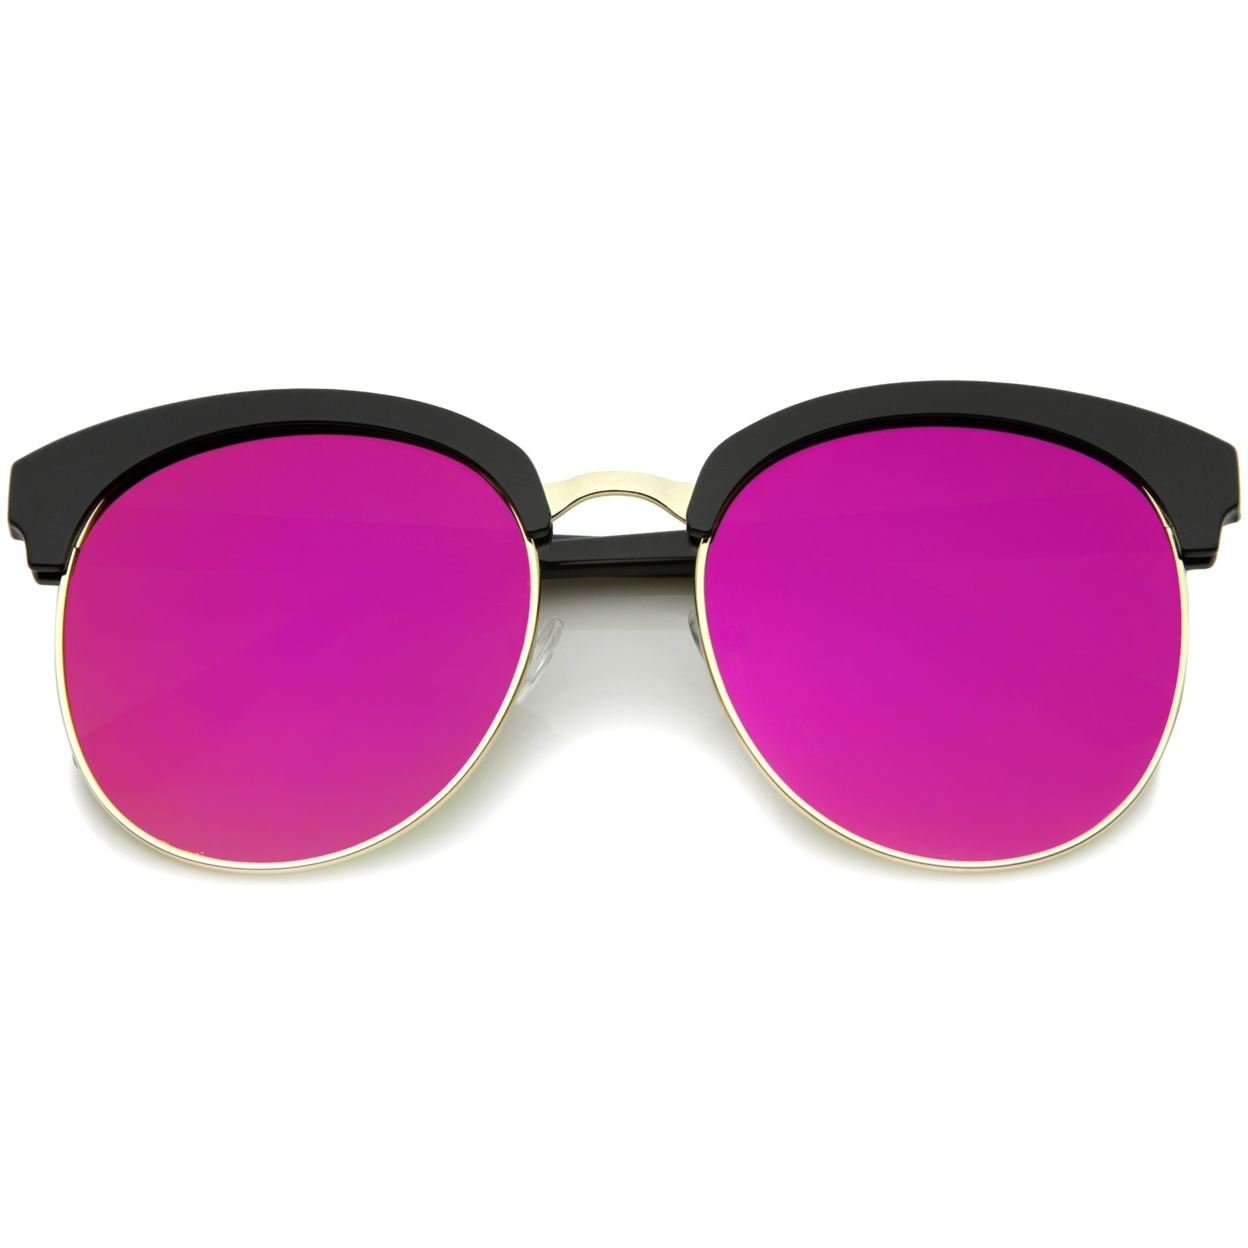 Womens Oversize Half-Frame Mirrored Flat Lens Round Sunglasses 68mm - Tortoise-Gold / Purple Mirror